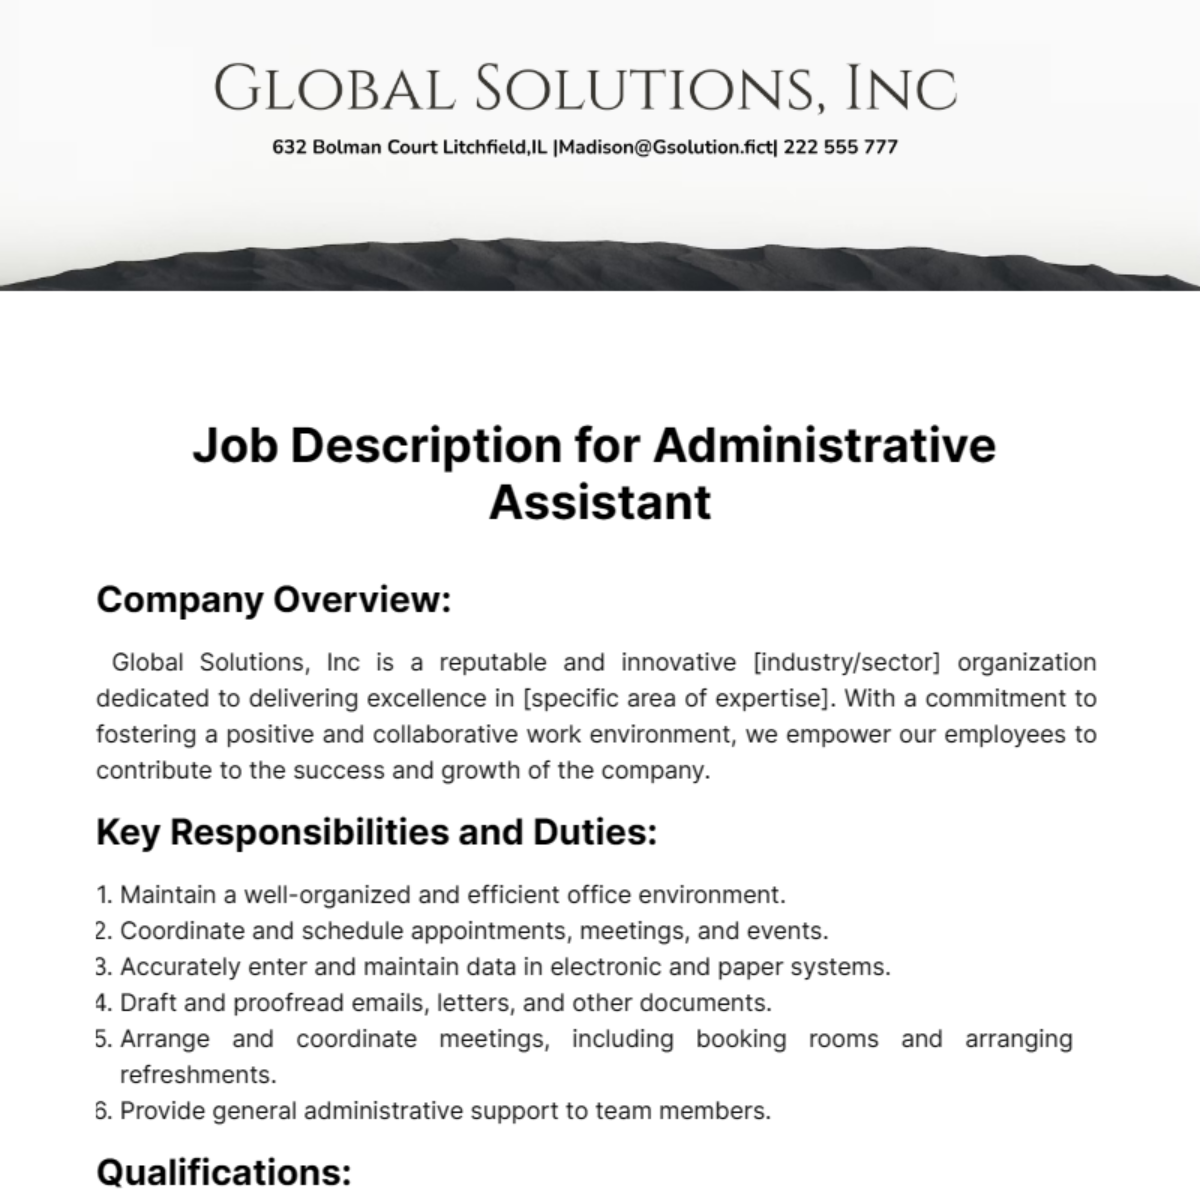 Job Description for Administrative Assistant Template